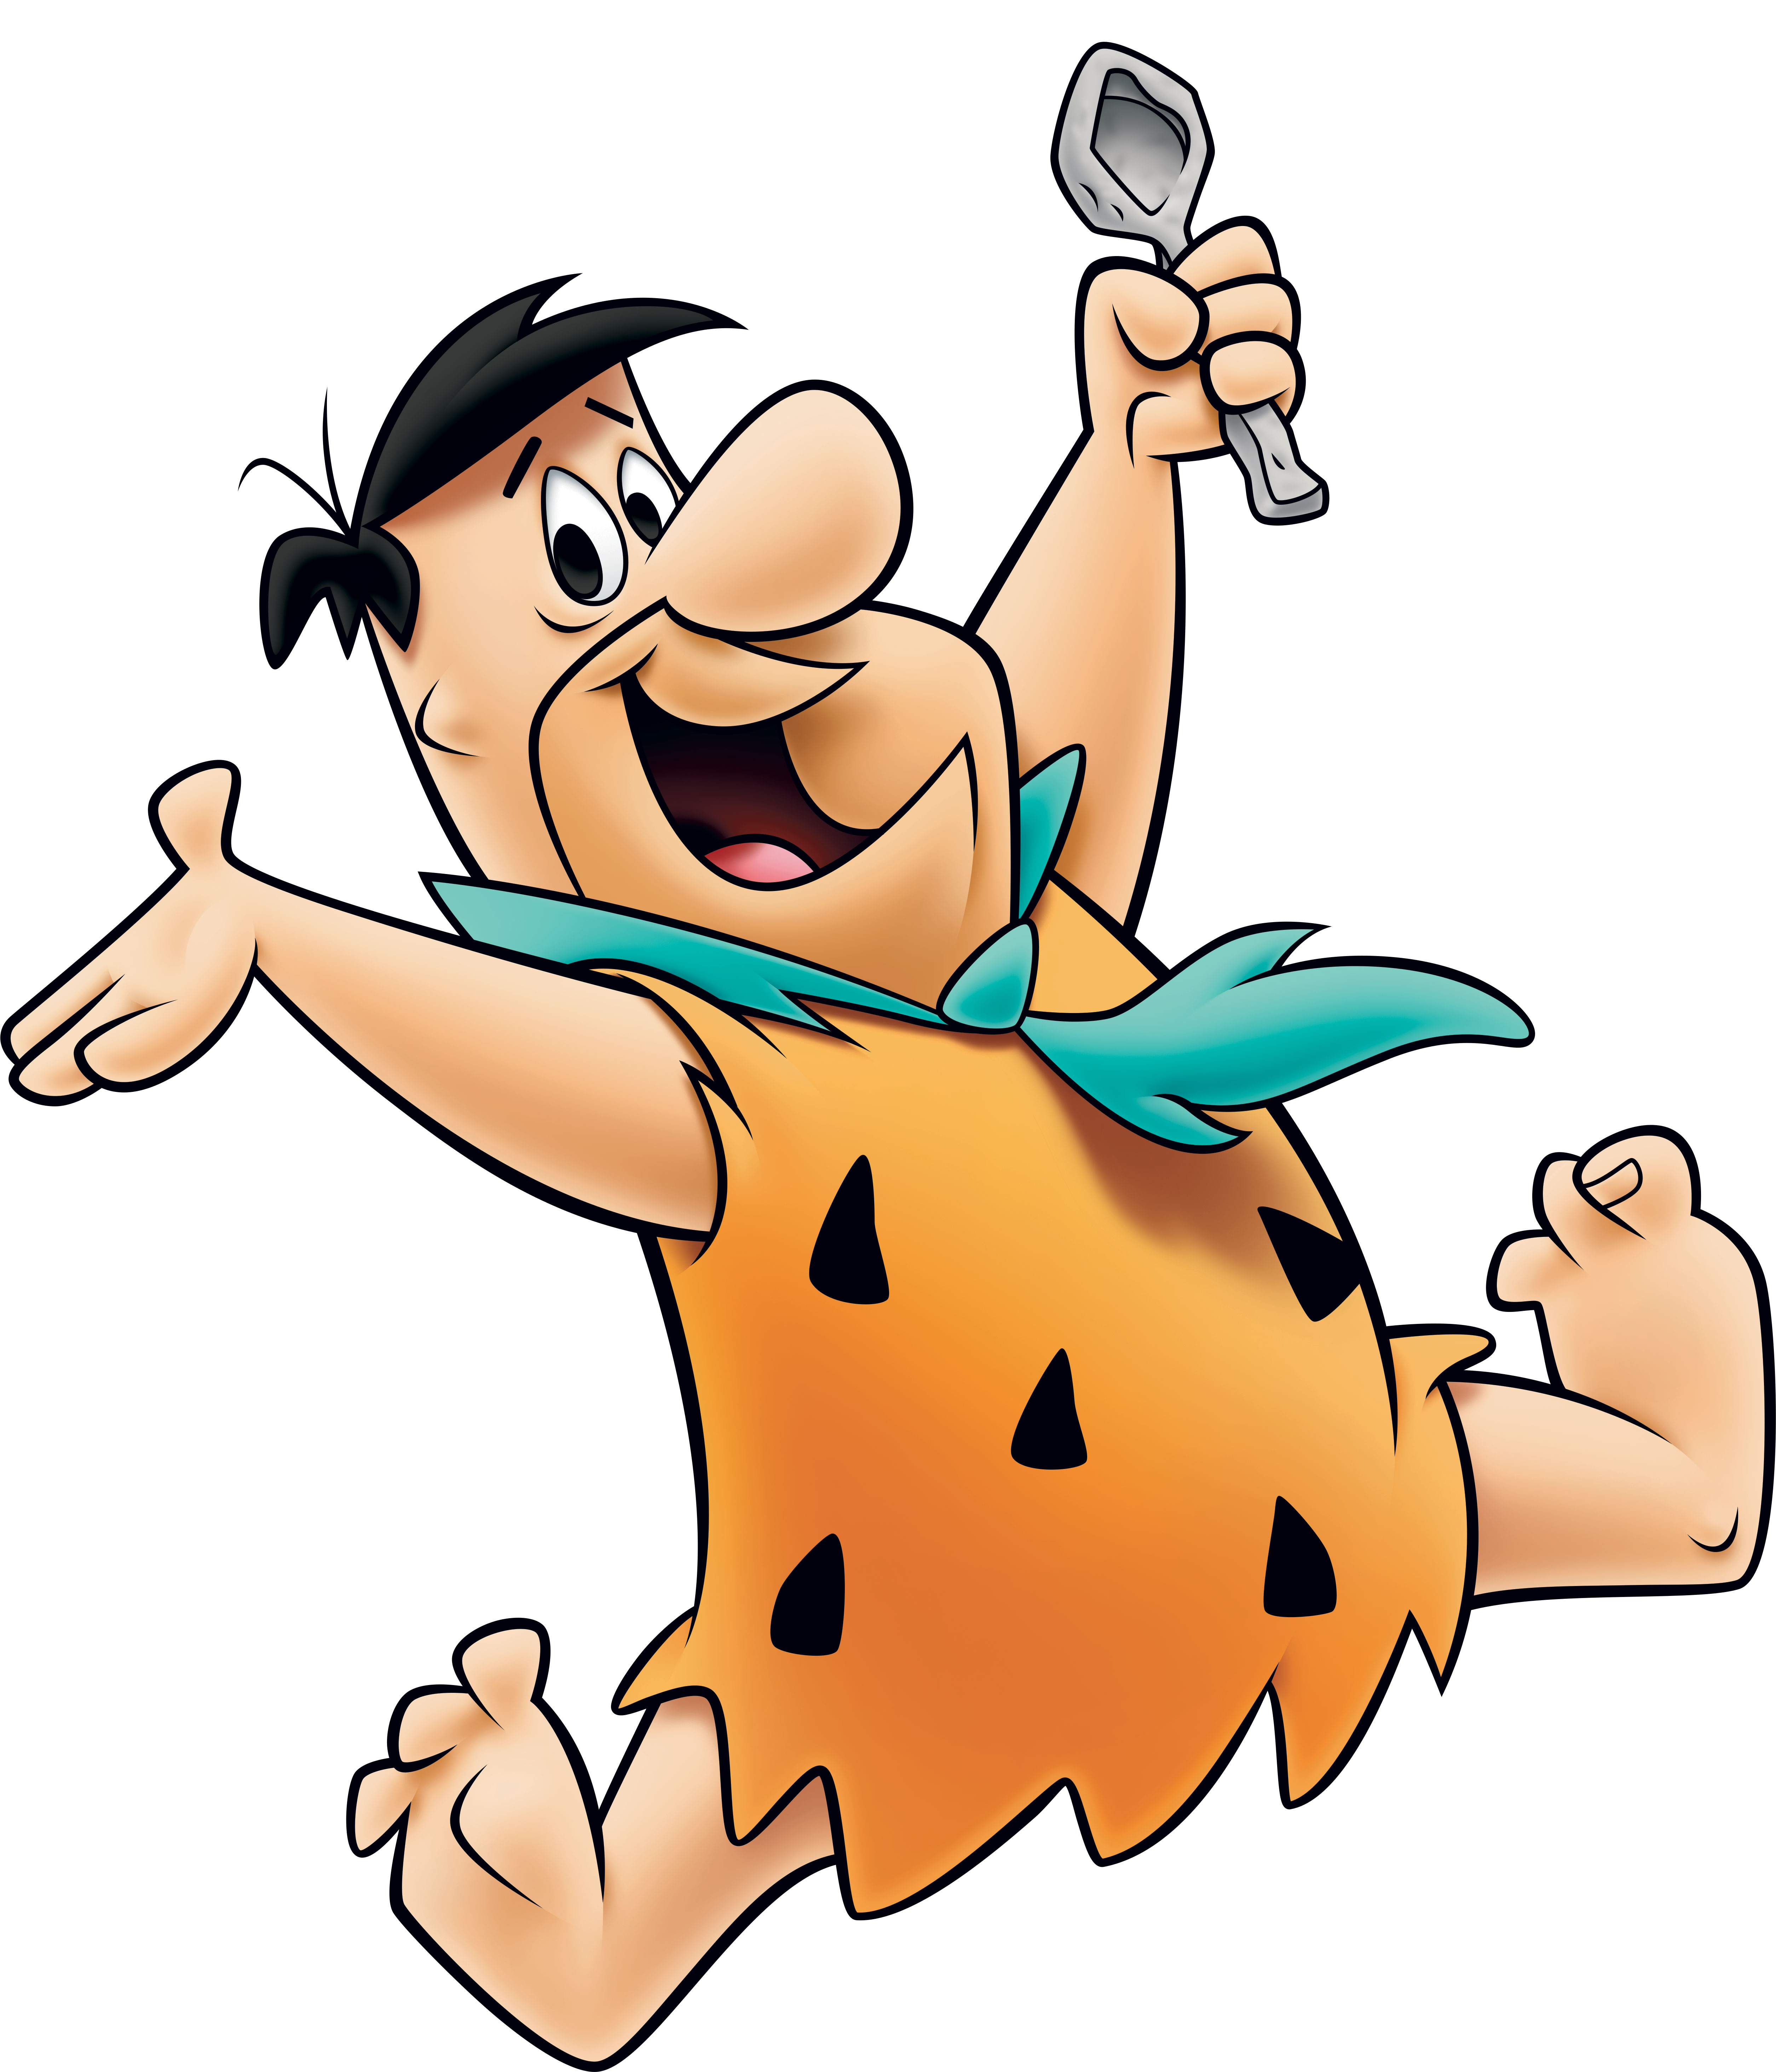 Fred Flintstone PEBBLES Cereal Mascot